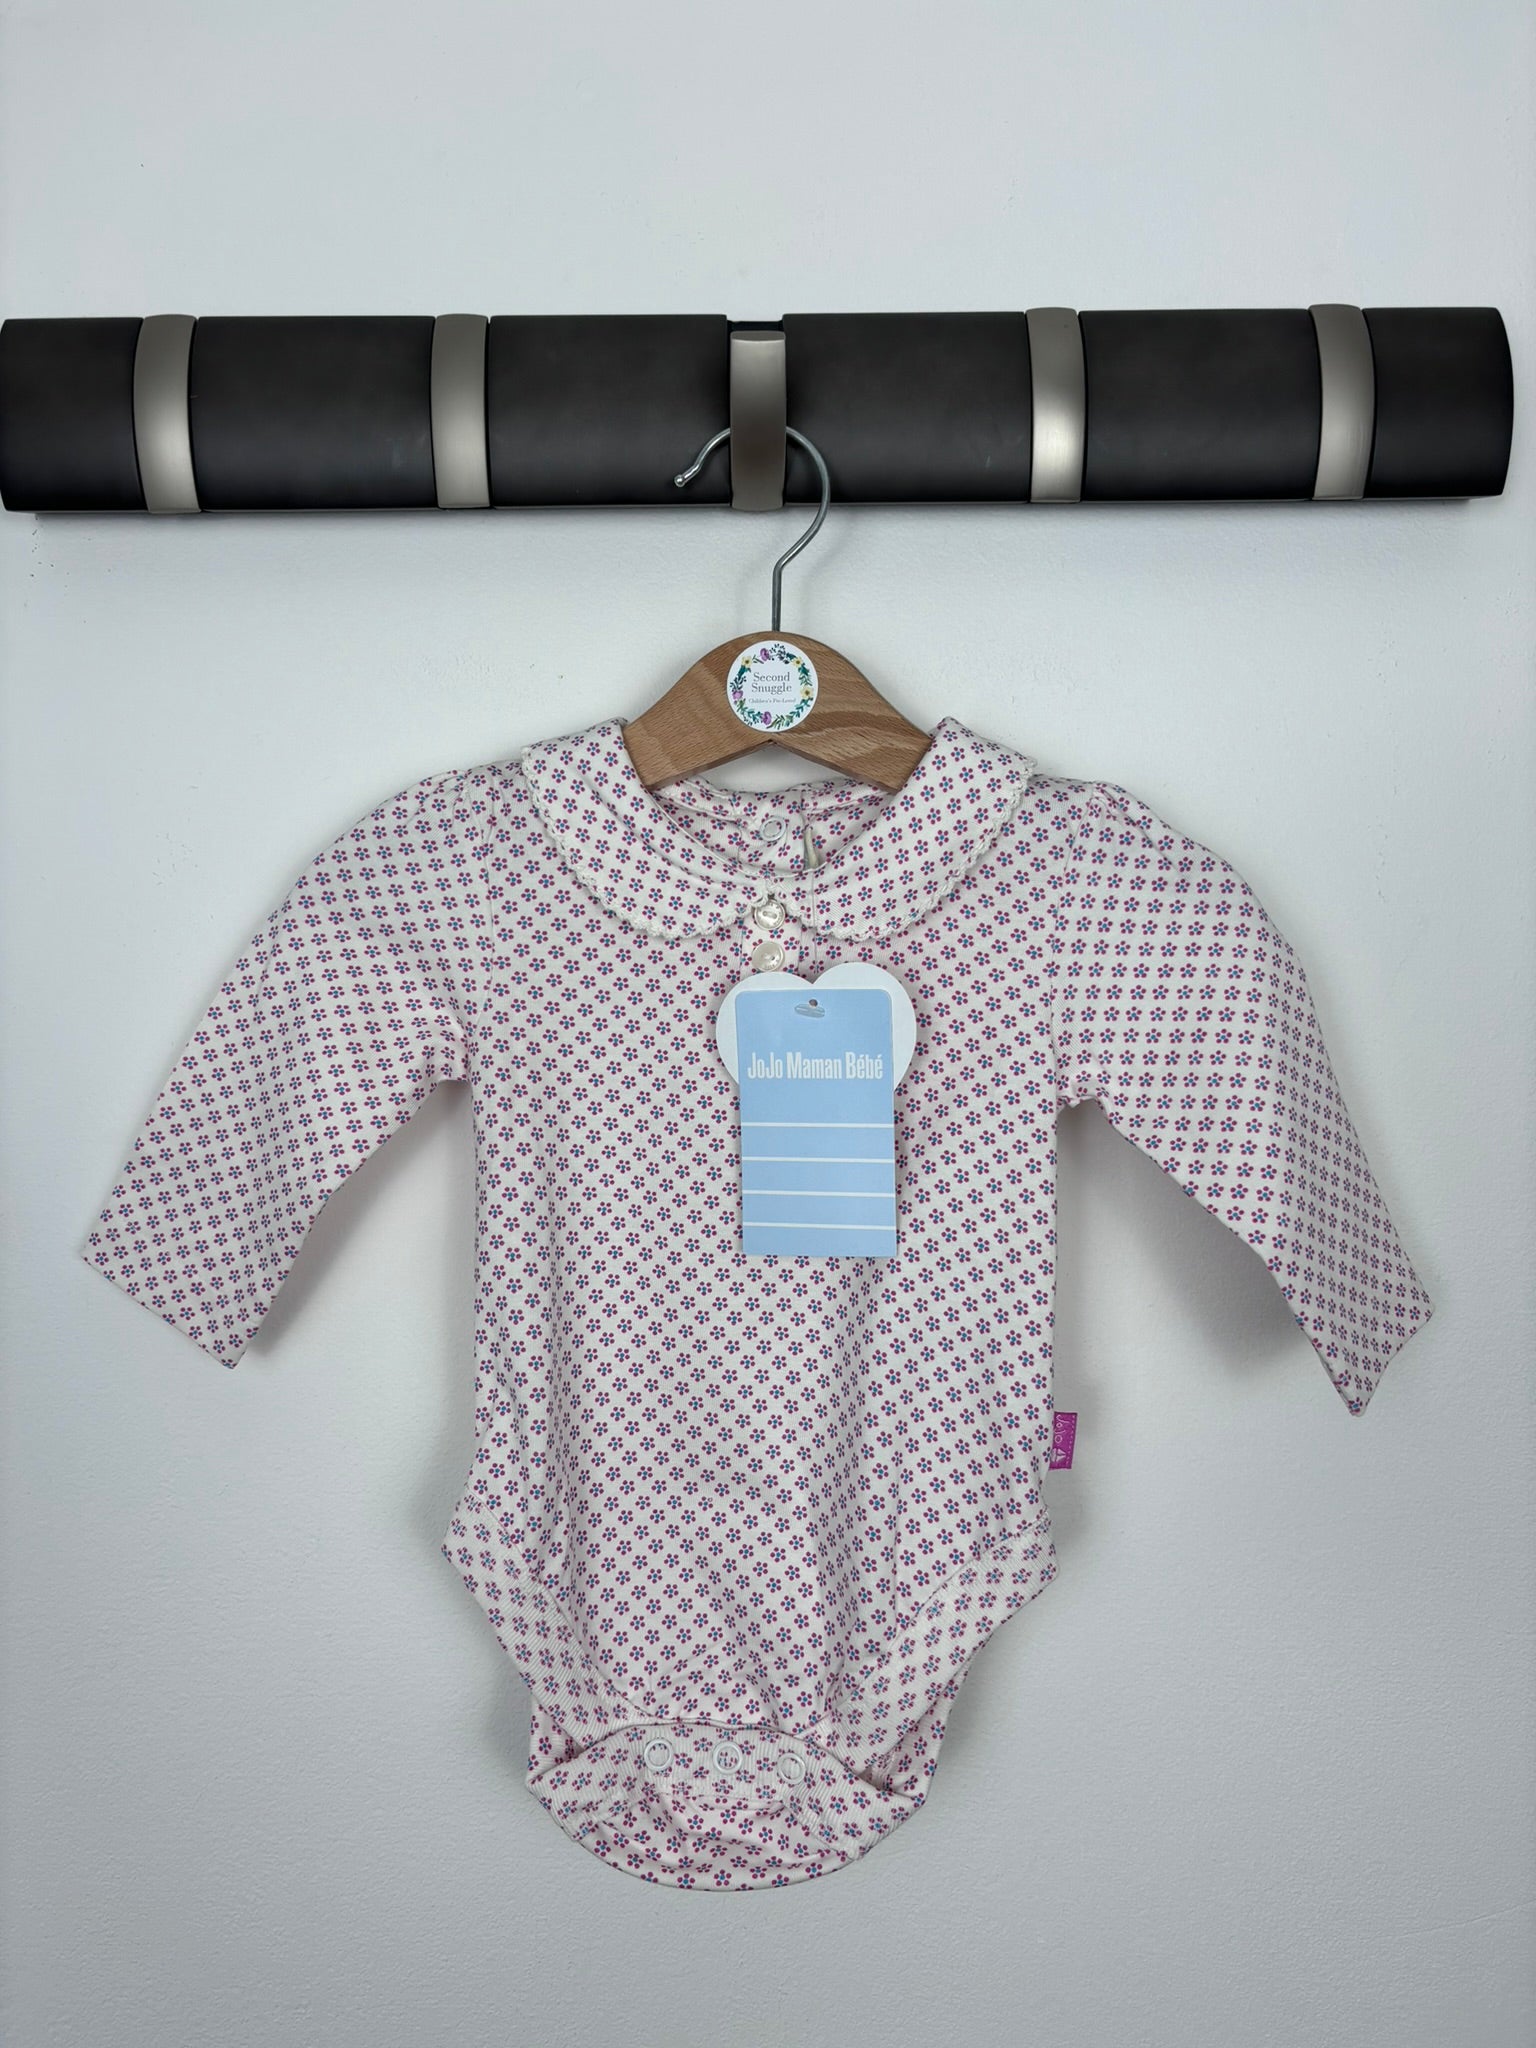 JoJo Maman Bebe 3-6 Months-Vests-Second Snuggle Preloved